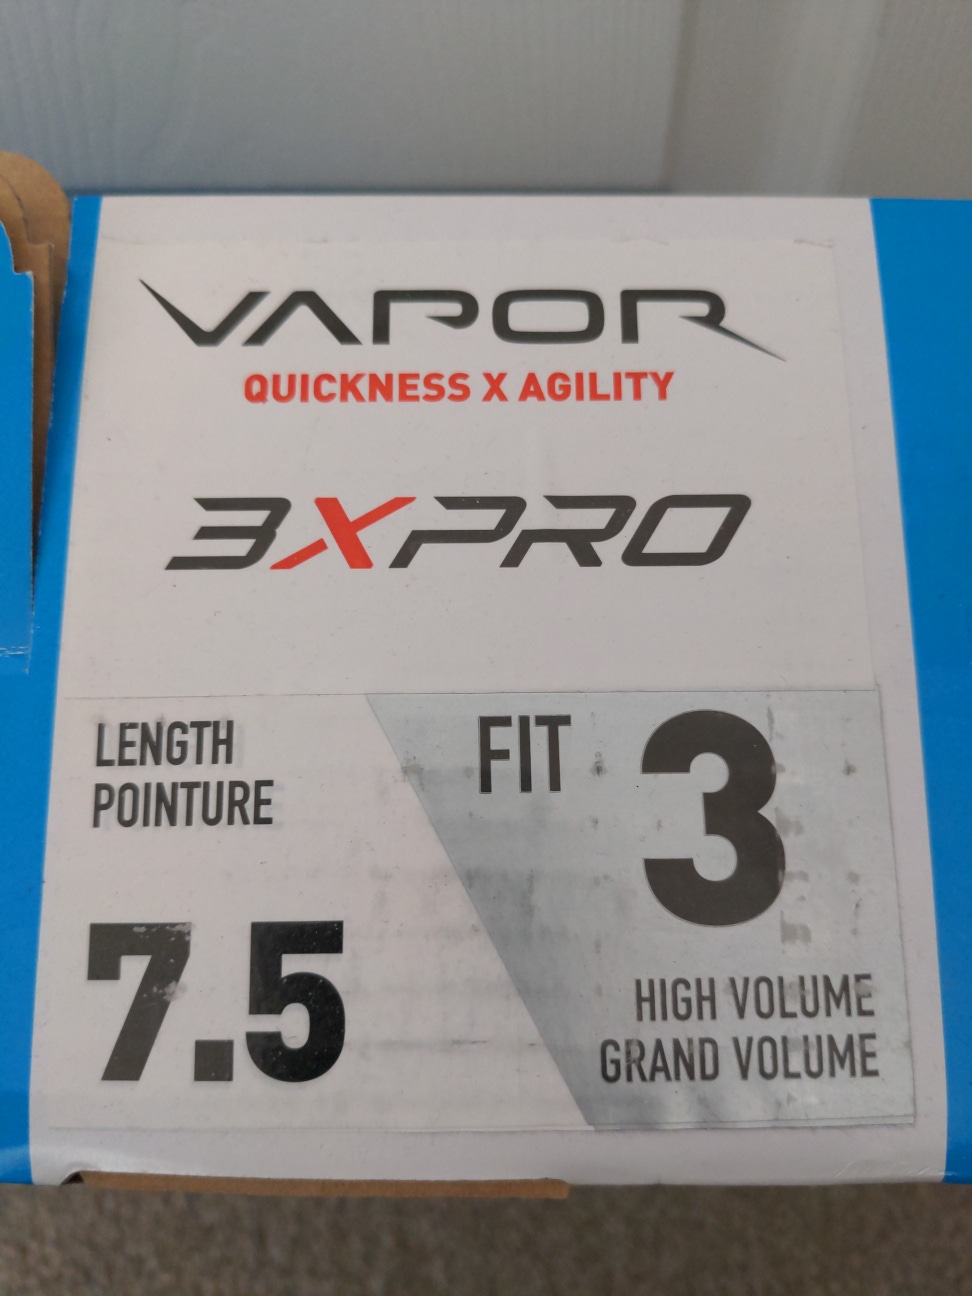 New | Bauer Vapor 3X Pro Hockey Skates | Size 7.5 Fit 3